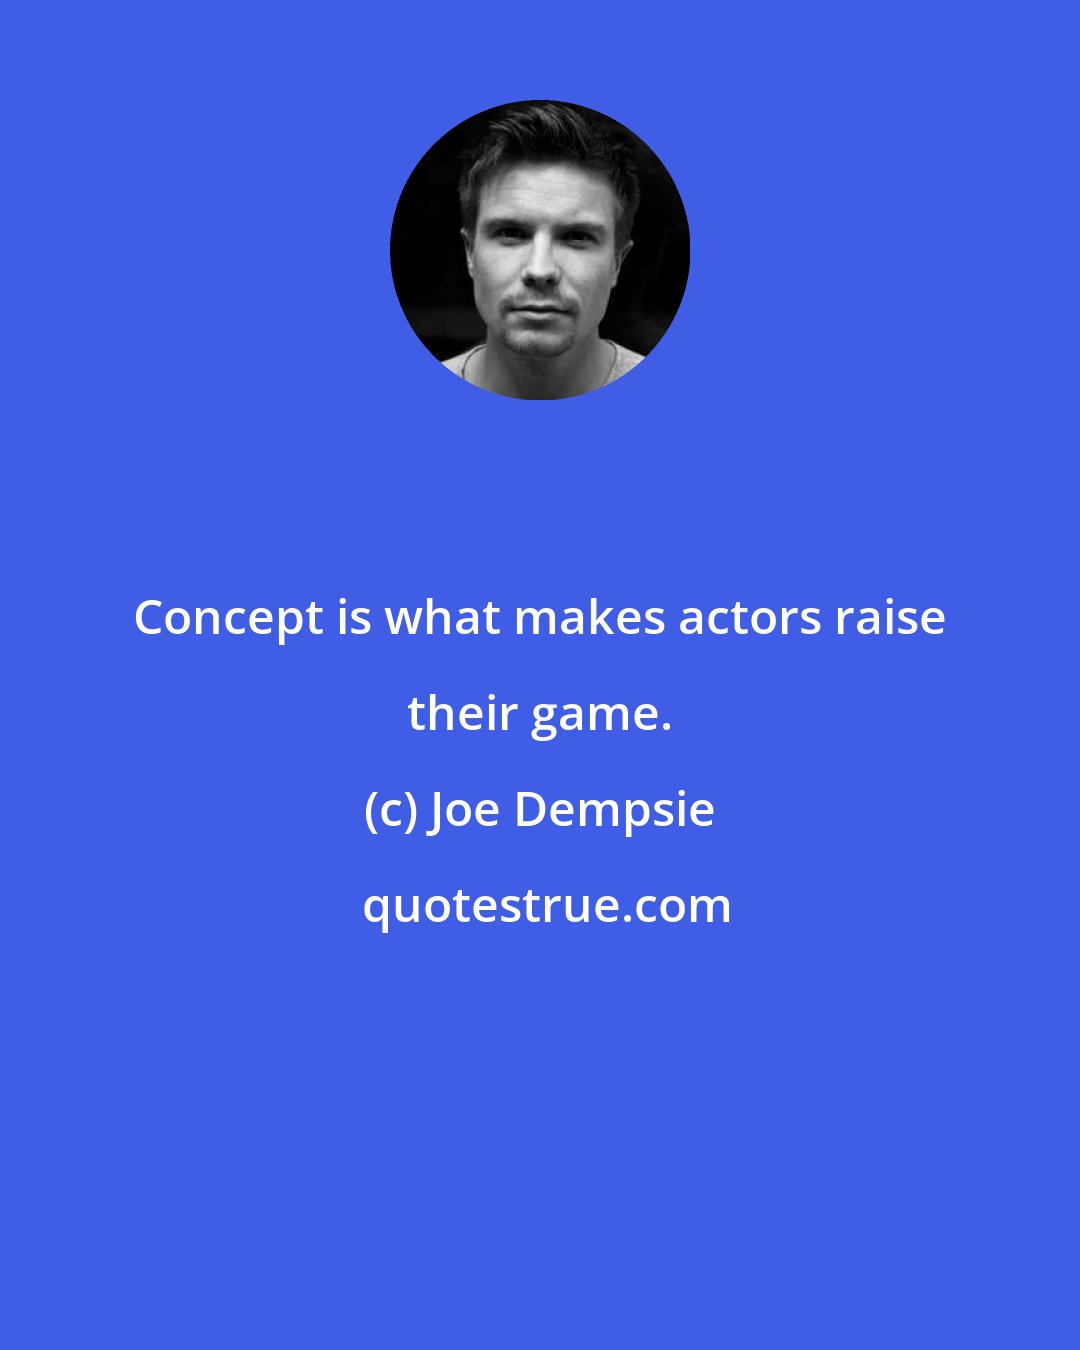 Joe Dempsie: Concept is what makes actors raise their game.